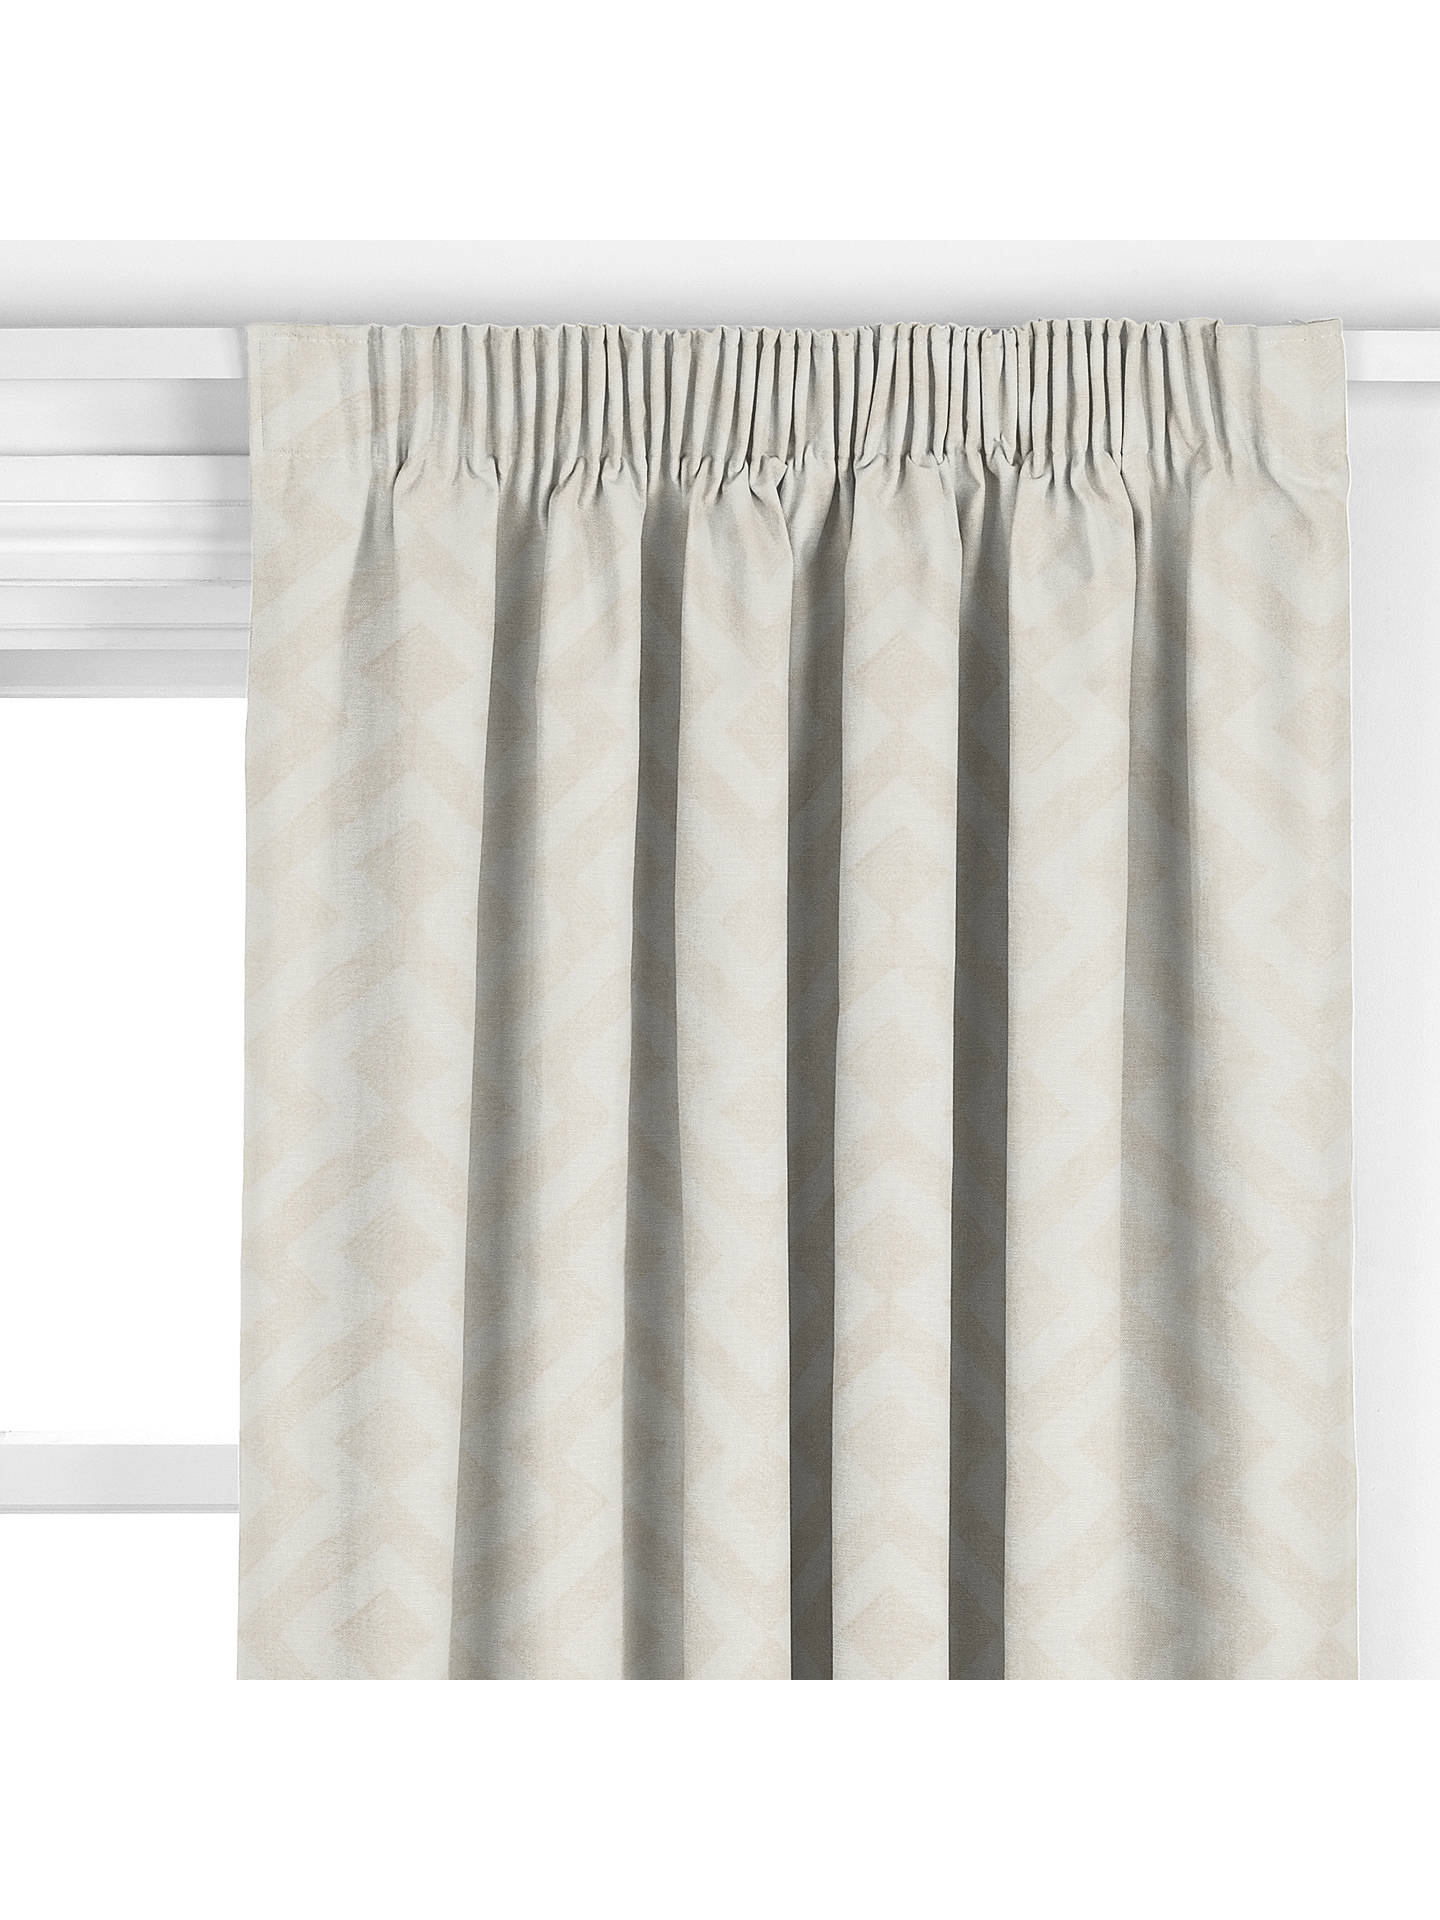 John Lewis Meeko Made to Measure Curtains, Marshmallow